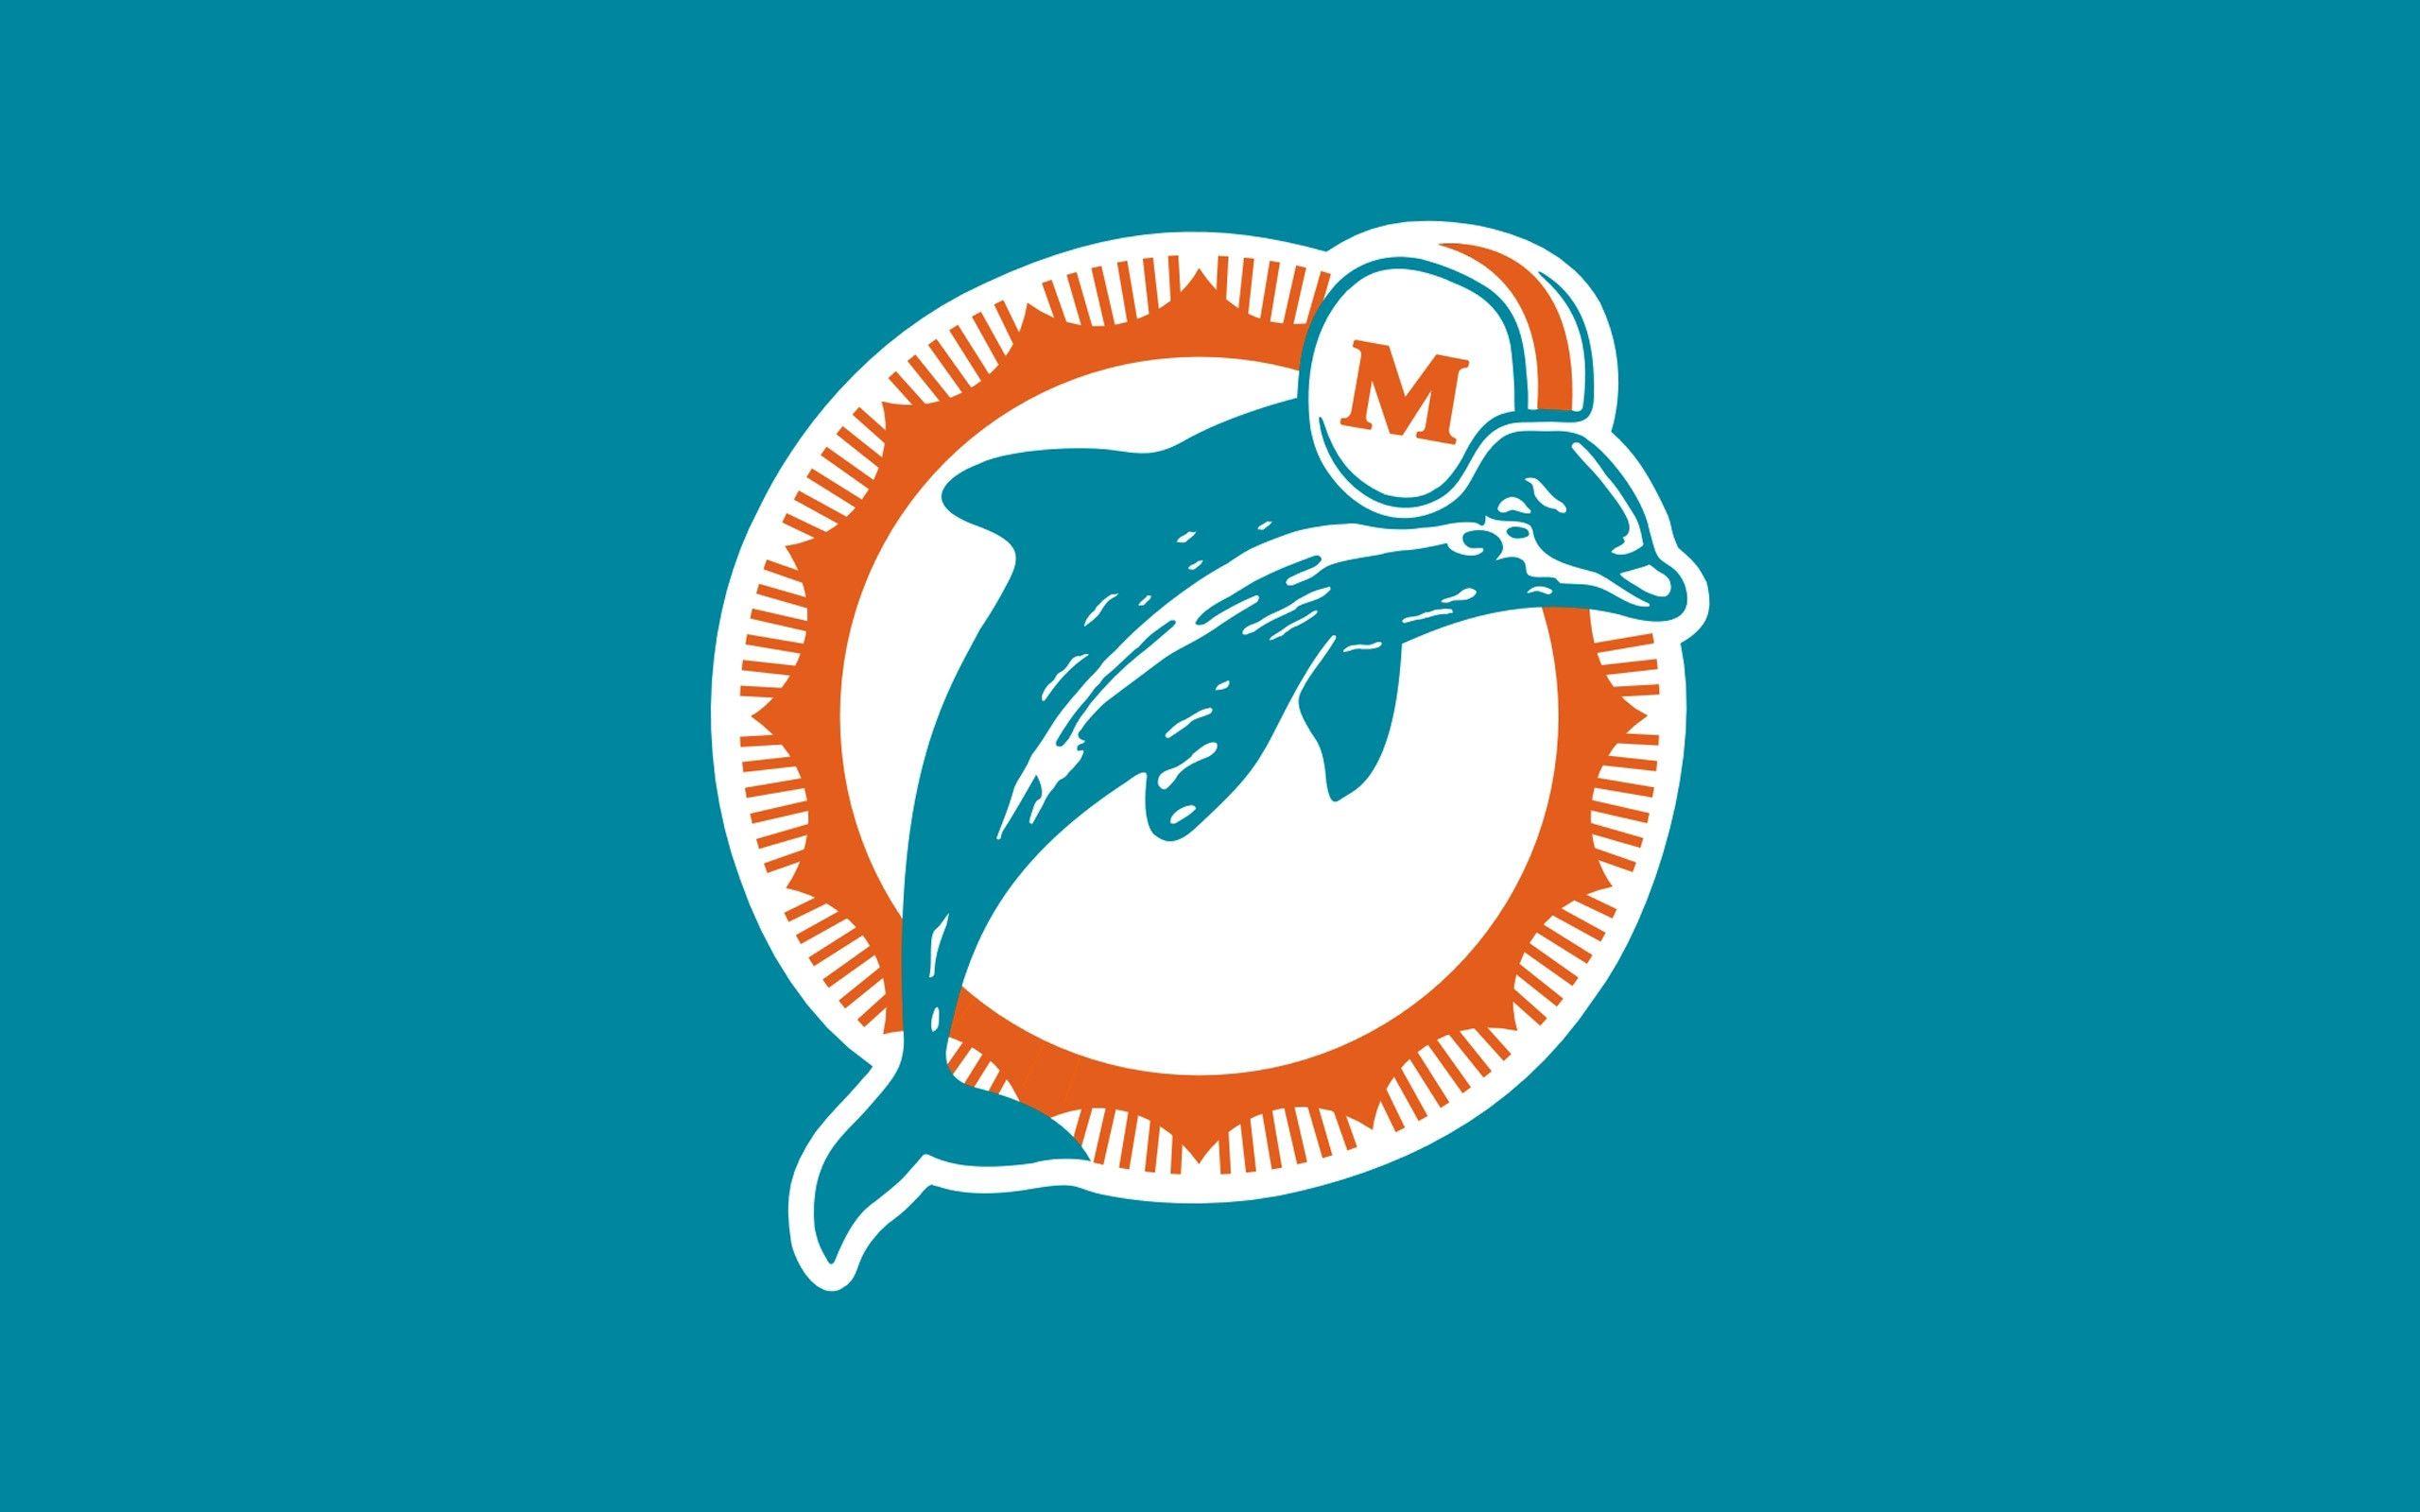 Miami Dolphins wallpaper. Miami Dolphins background